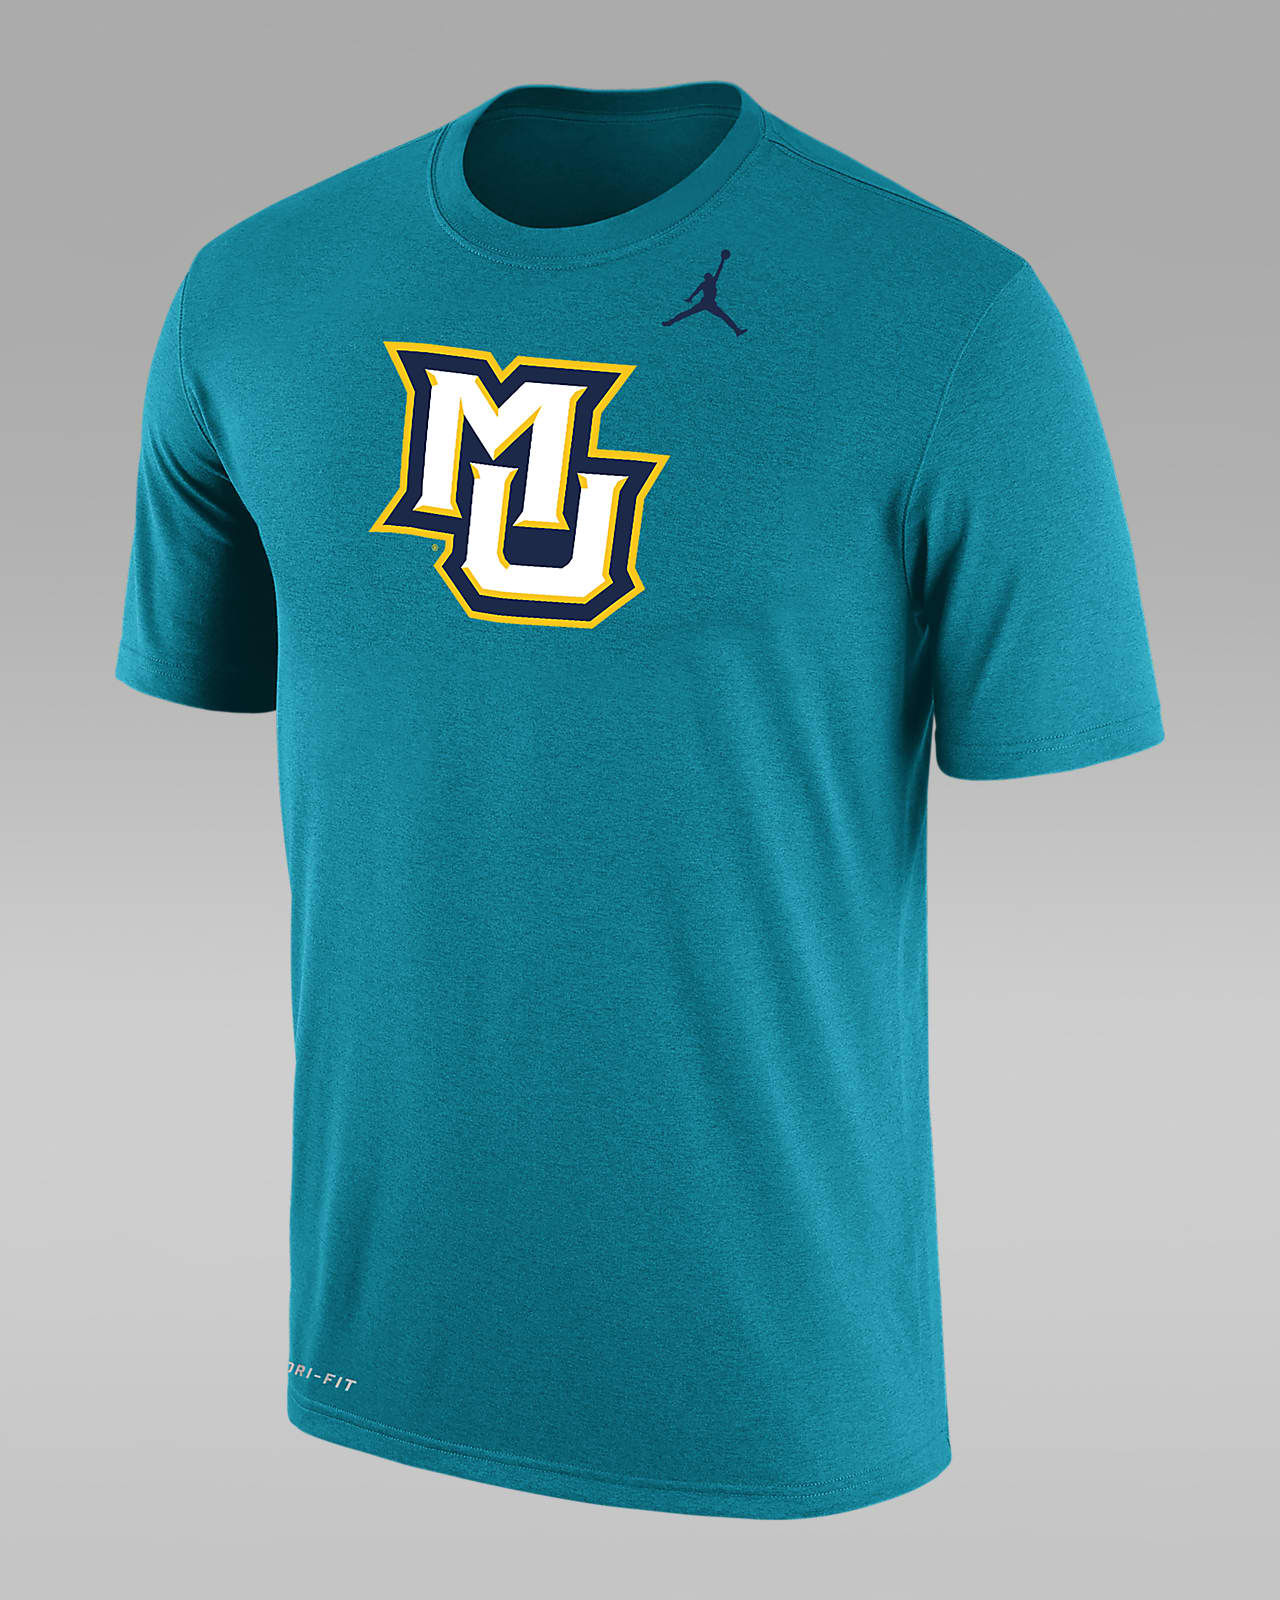 Marquette Men's Jordan Dri-FIT College T-Shirt